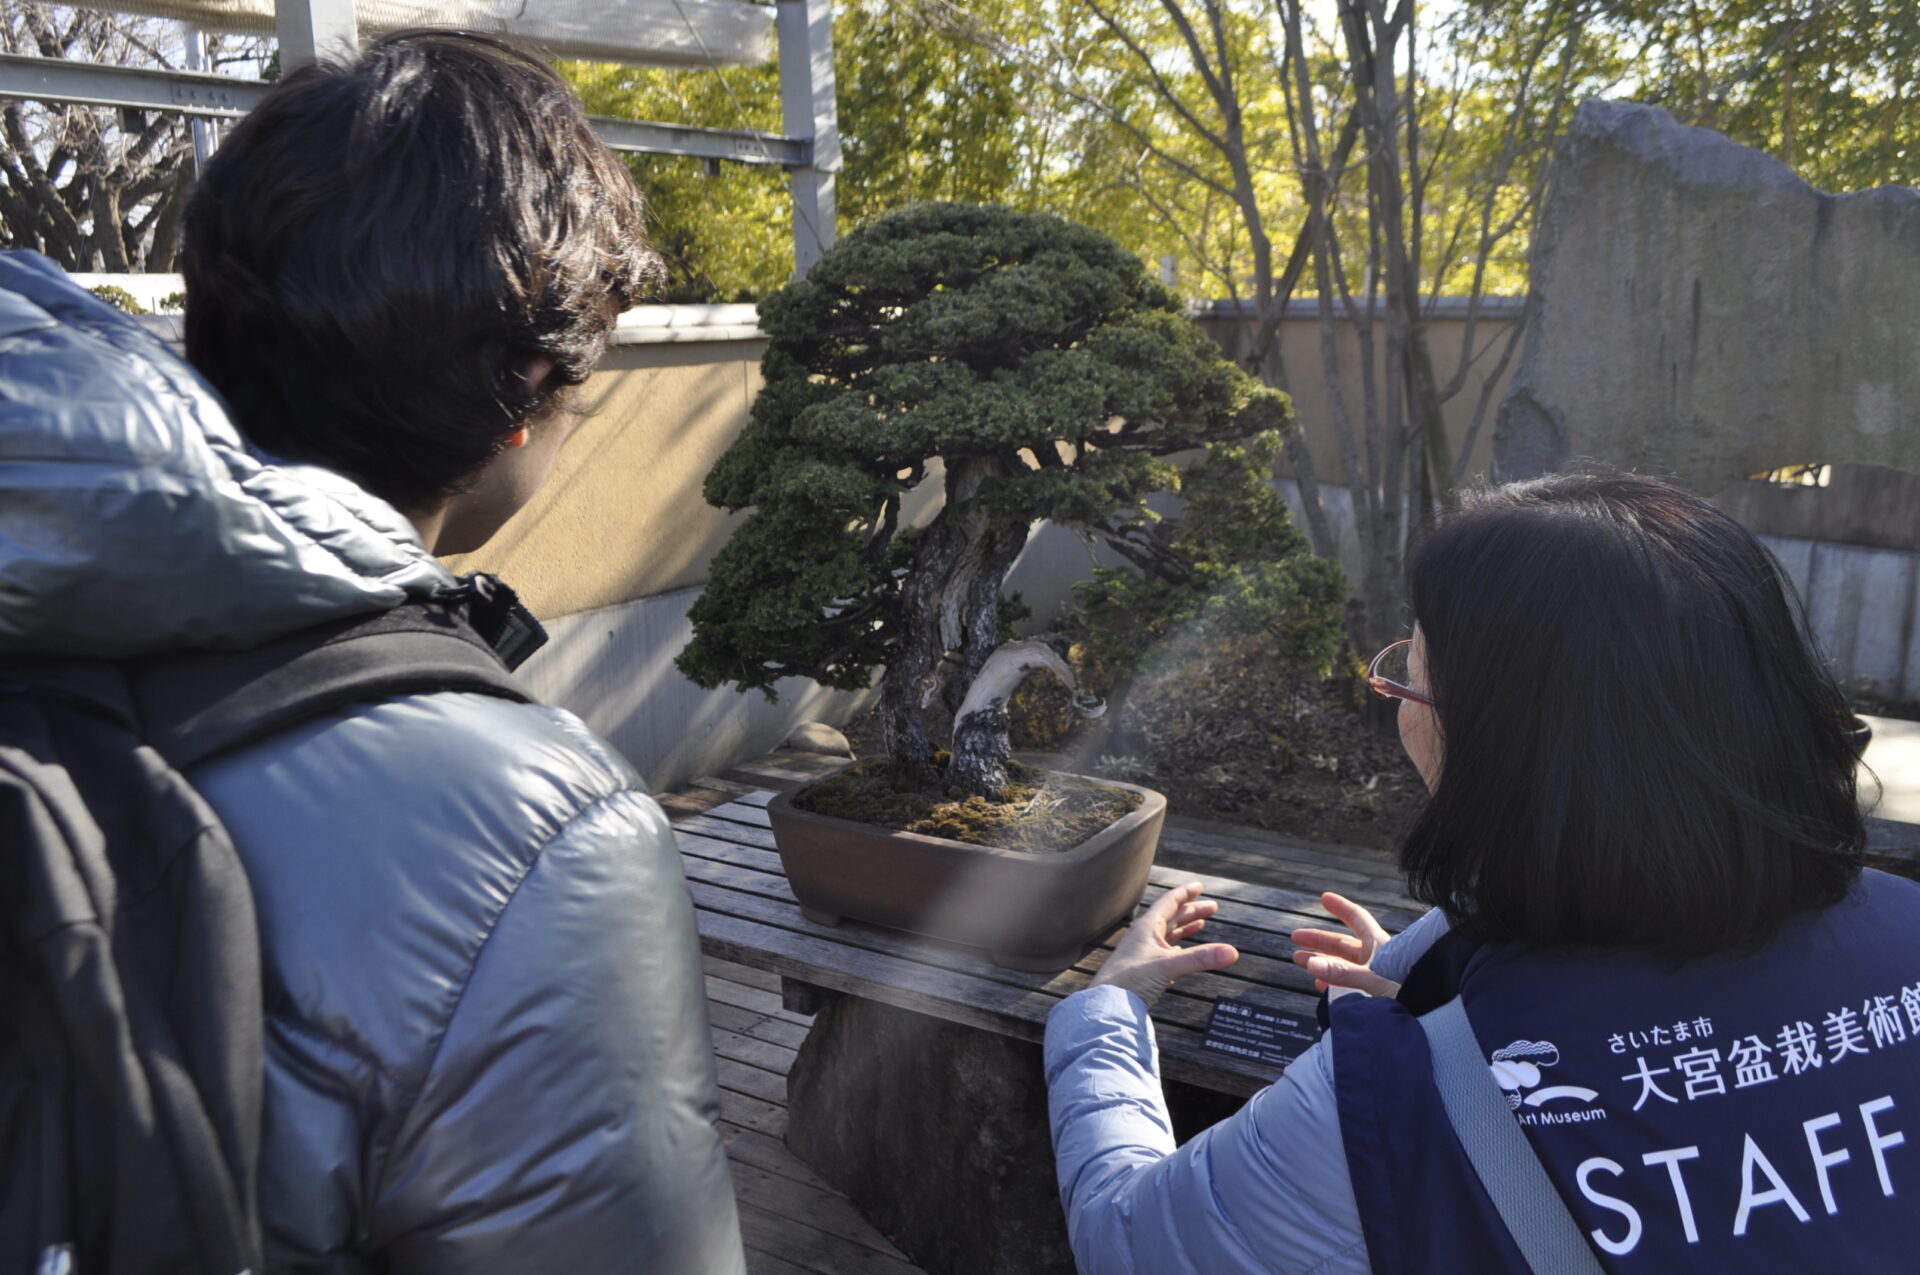 Giving a guide to a foreign visitor (bonsai garden guide).